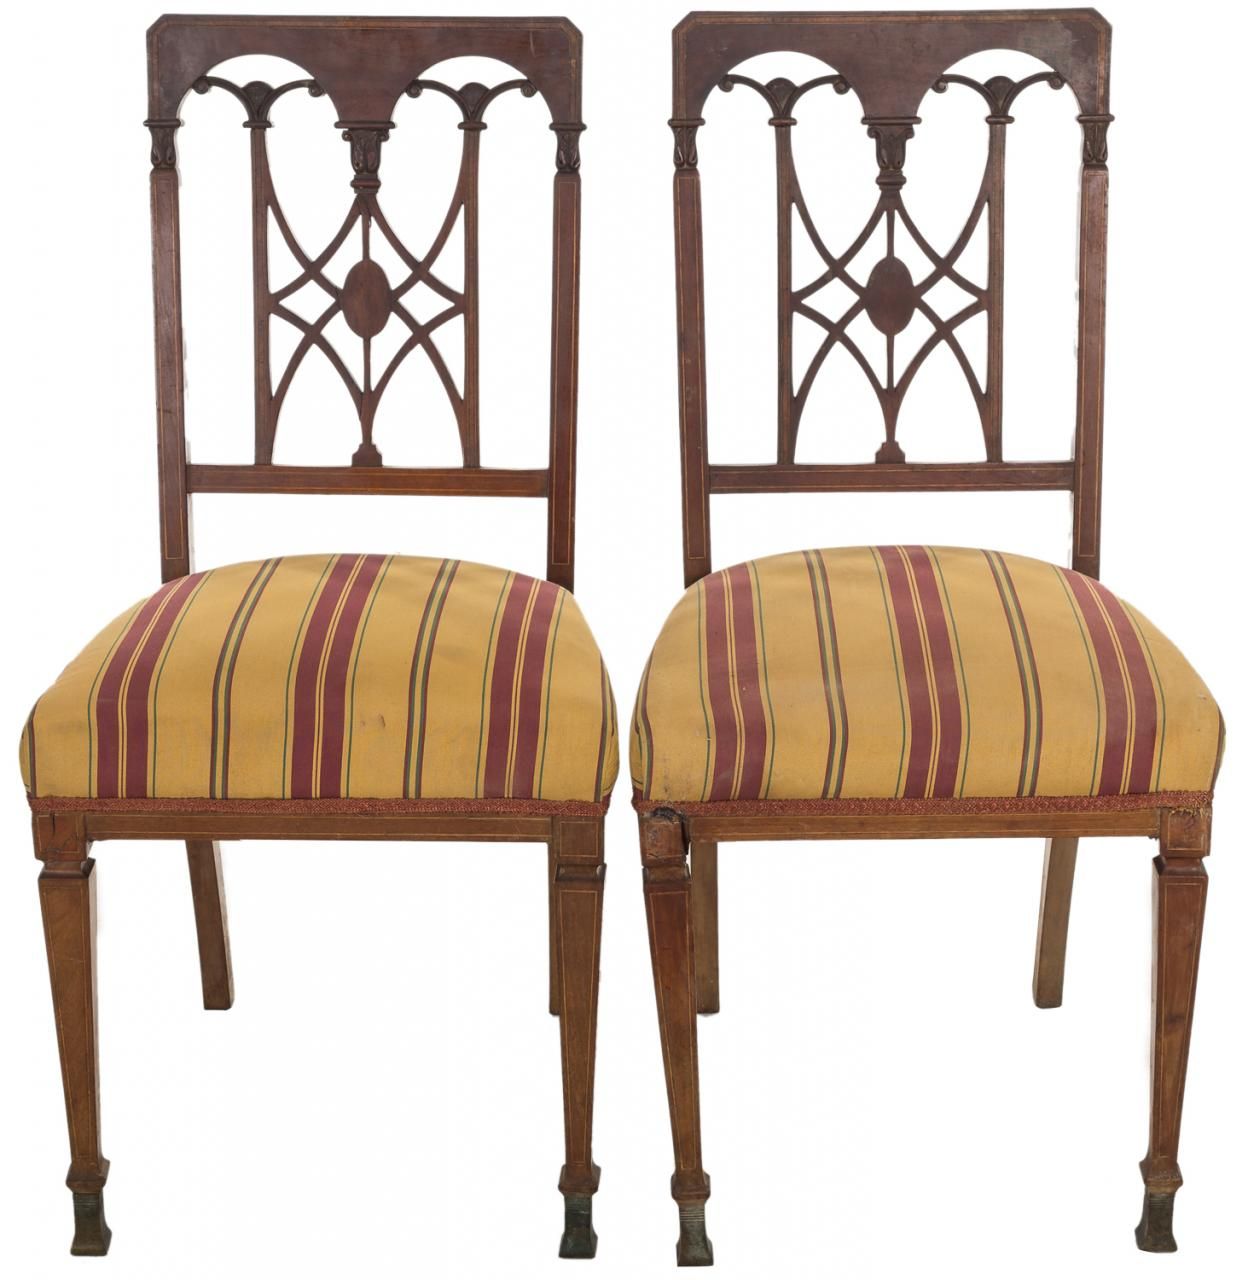 Null 一对英国桃花心木椅子，背部有镂空设计。 H. 1880.

90 x 42,5 x 43,5 cm
损坏。